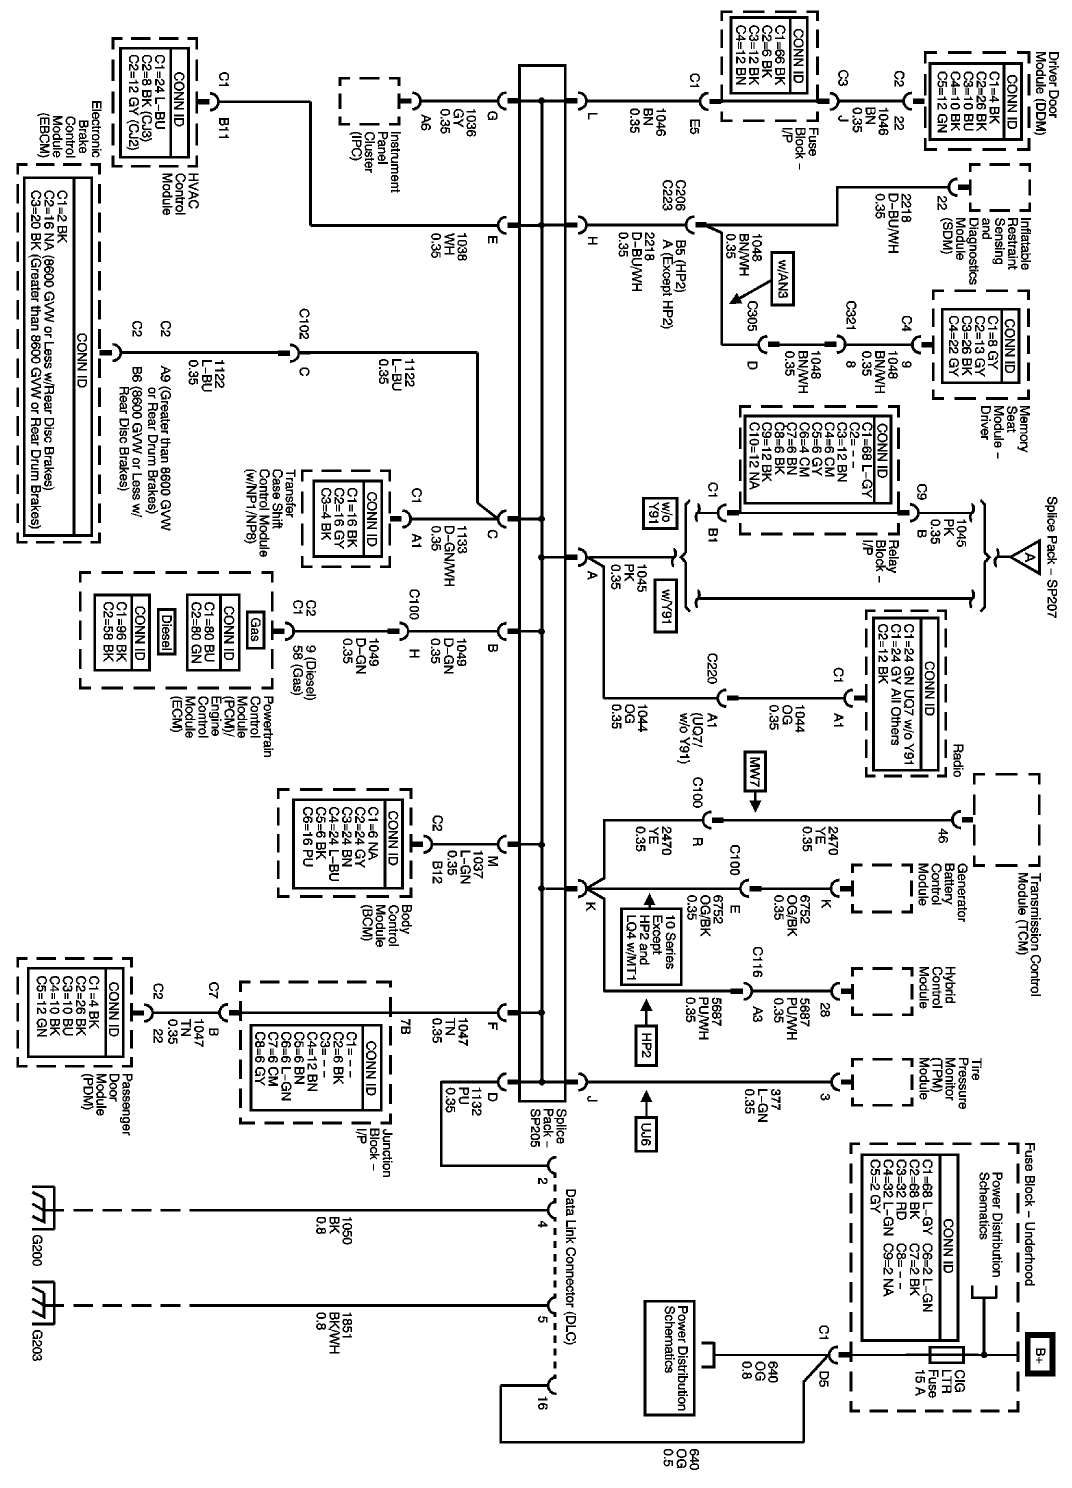 04 duramax ob2 wiring diagram